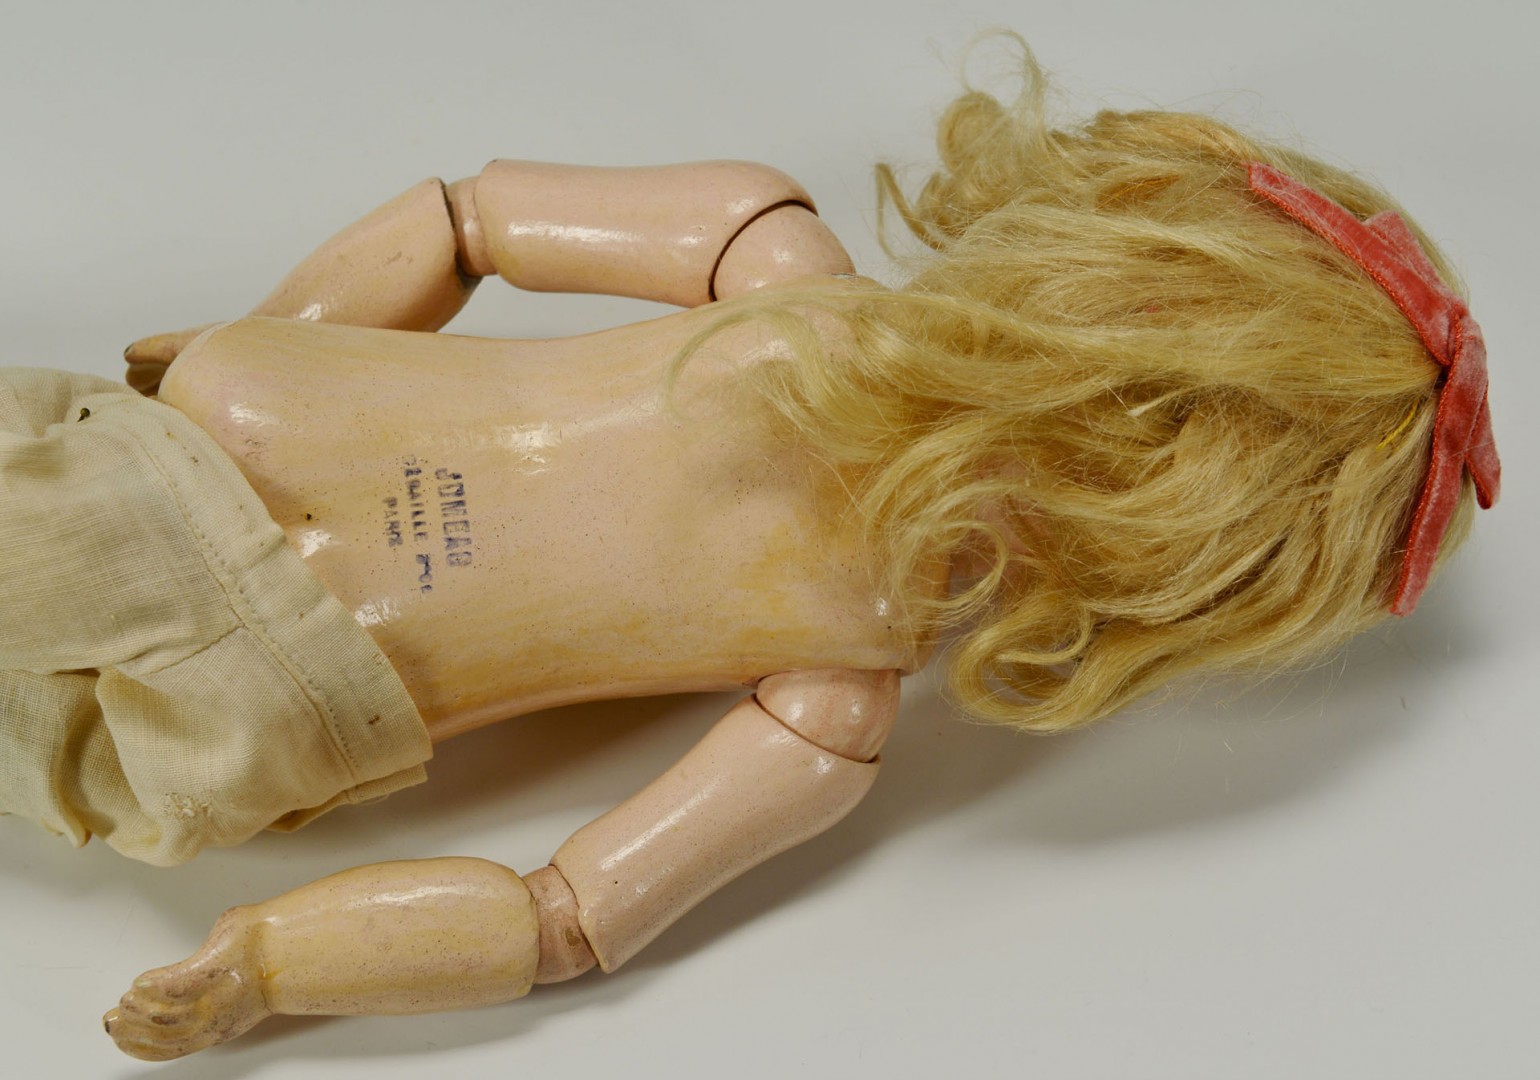 Lot 674: Depose Jumeau Bebe Doll in Petite Size